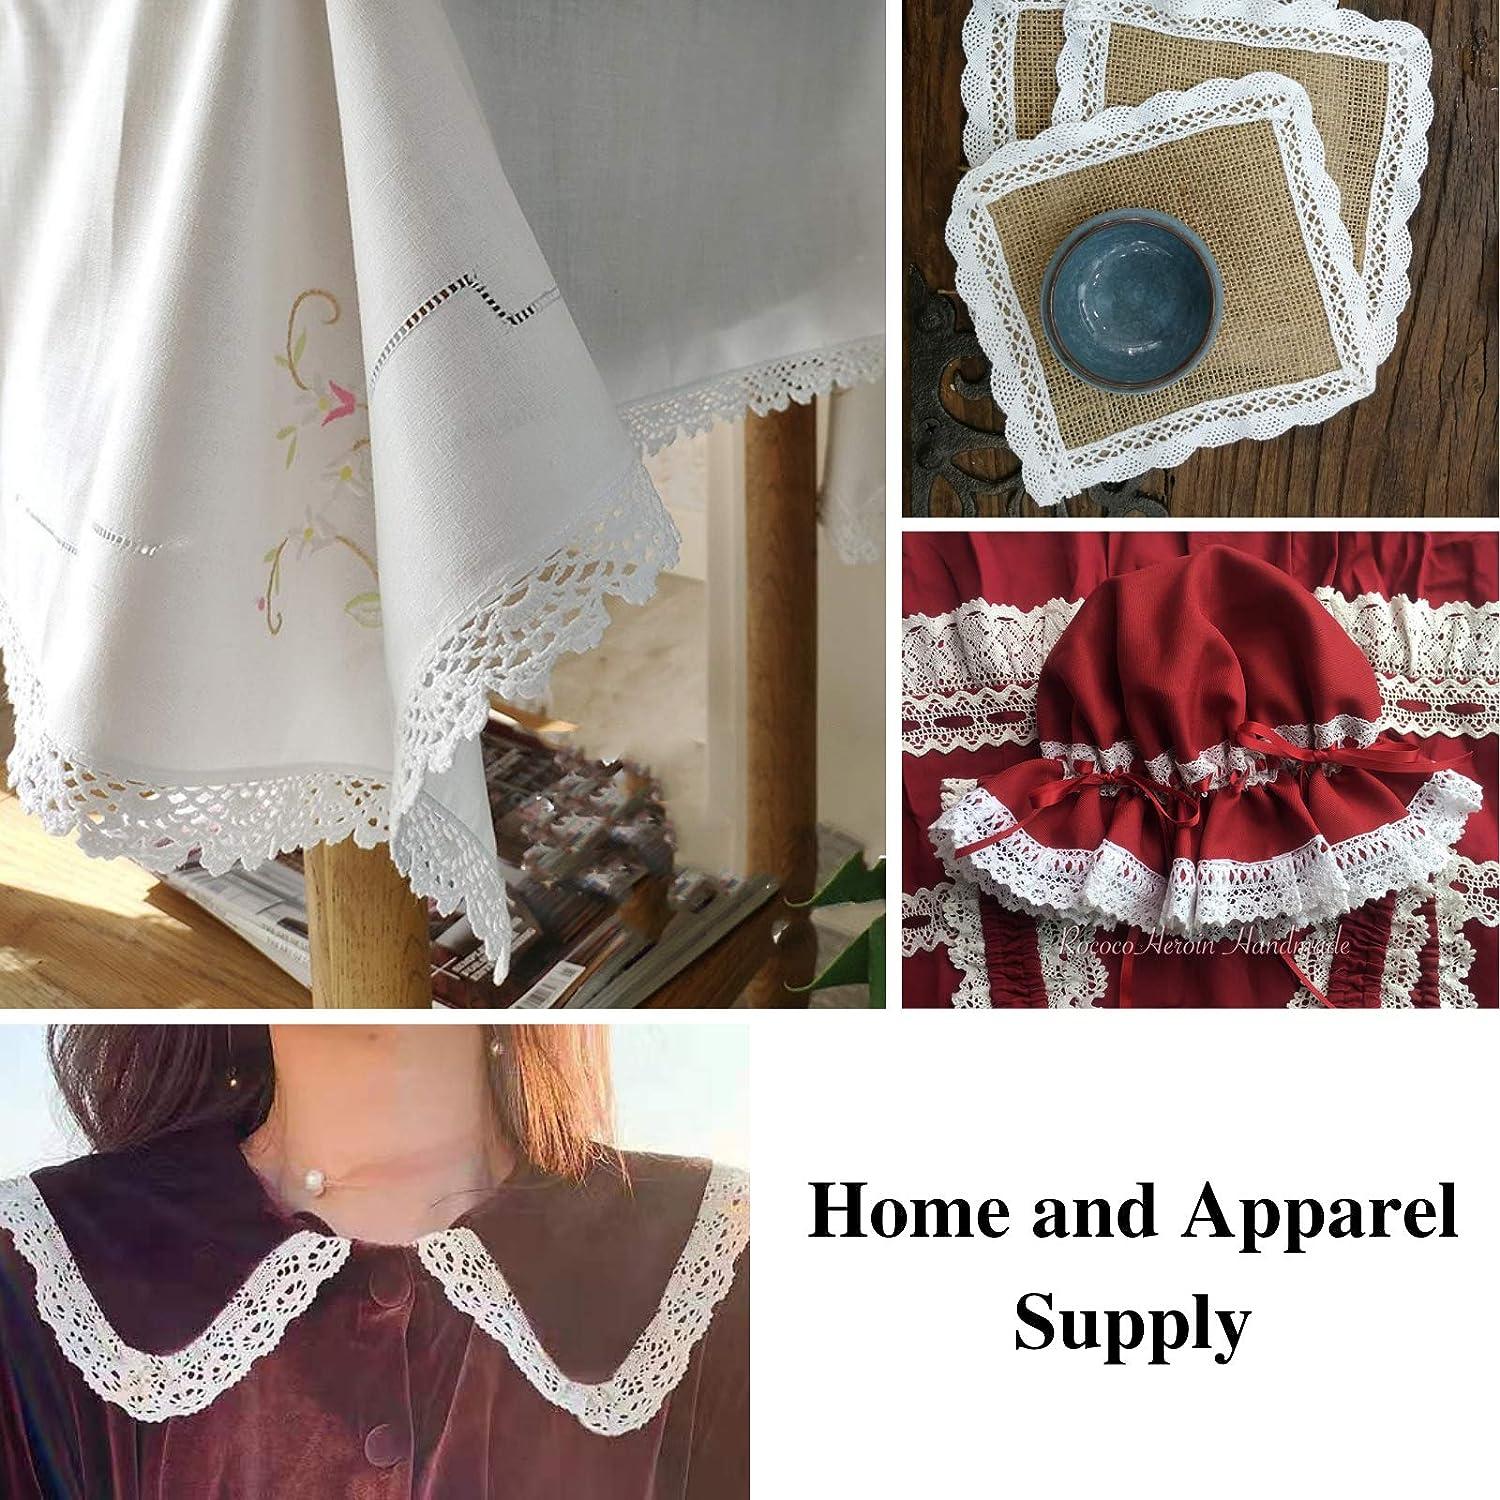 Lace Ribbon Cotton Crochet Lace Trim White Sewing Lace Ribbon by